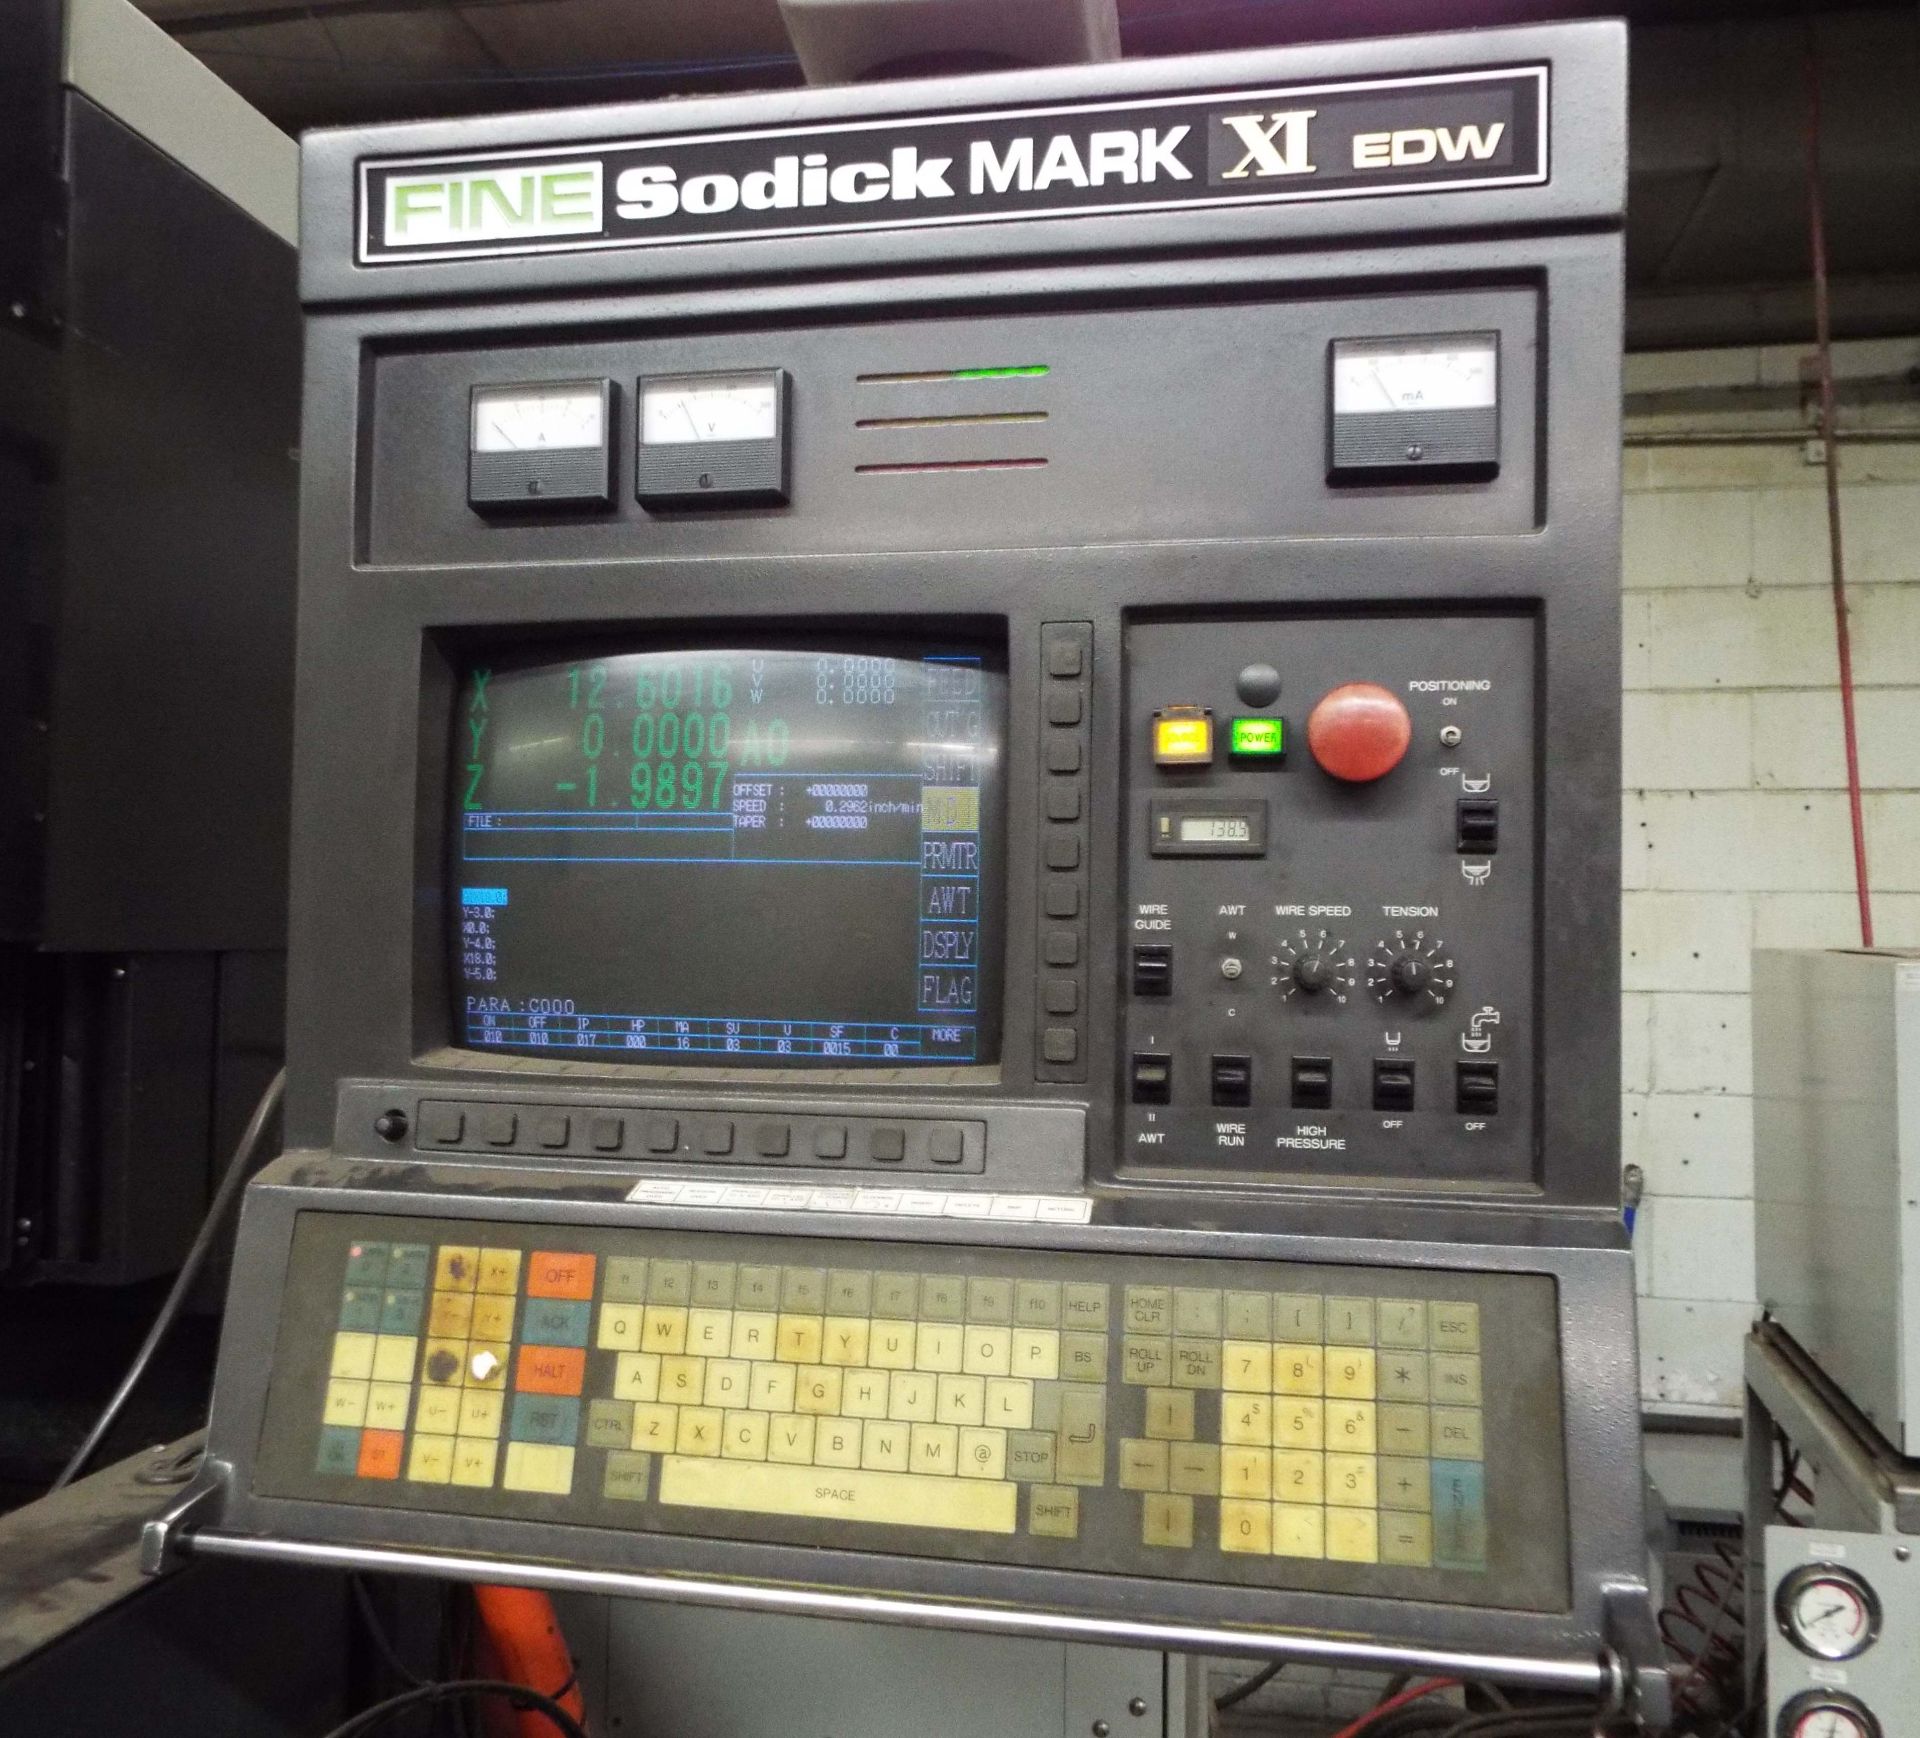 SODICK A500L CNC WIRECUT EDMS WITH FINE SODICK MARK XI EDW CNC CONTROLS, TRAVELS; X - 19.6", Y - - Image 2 of 5